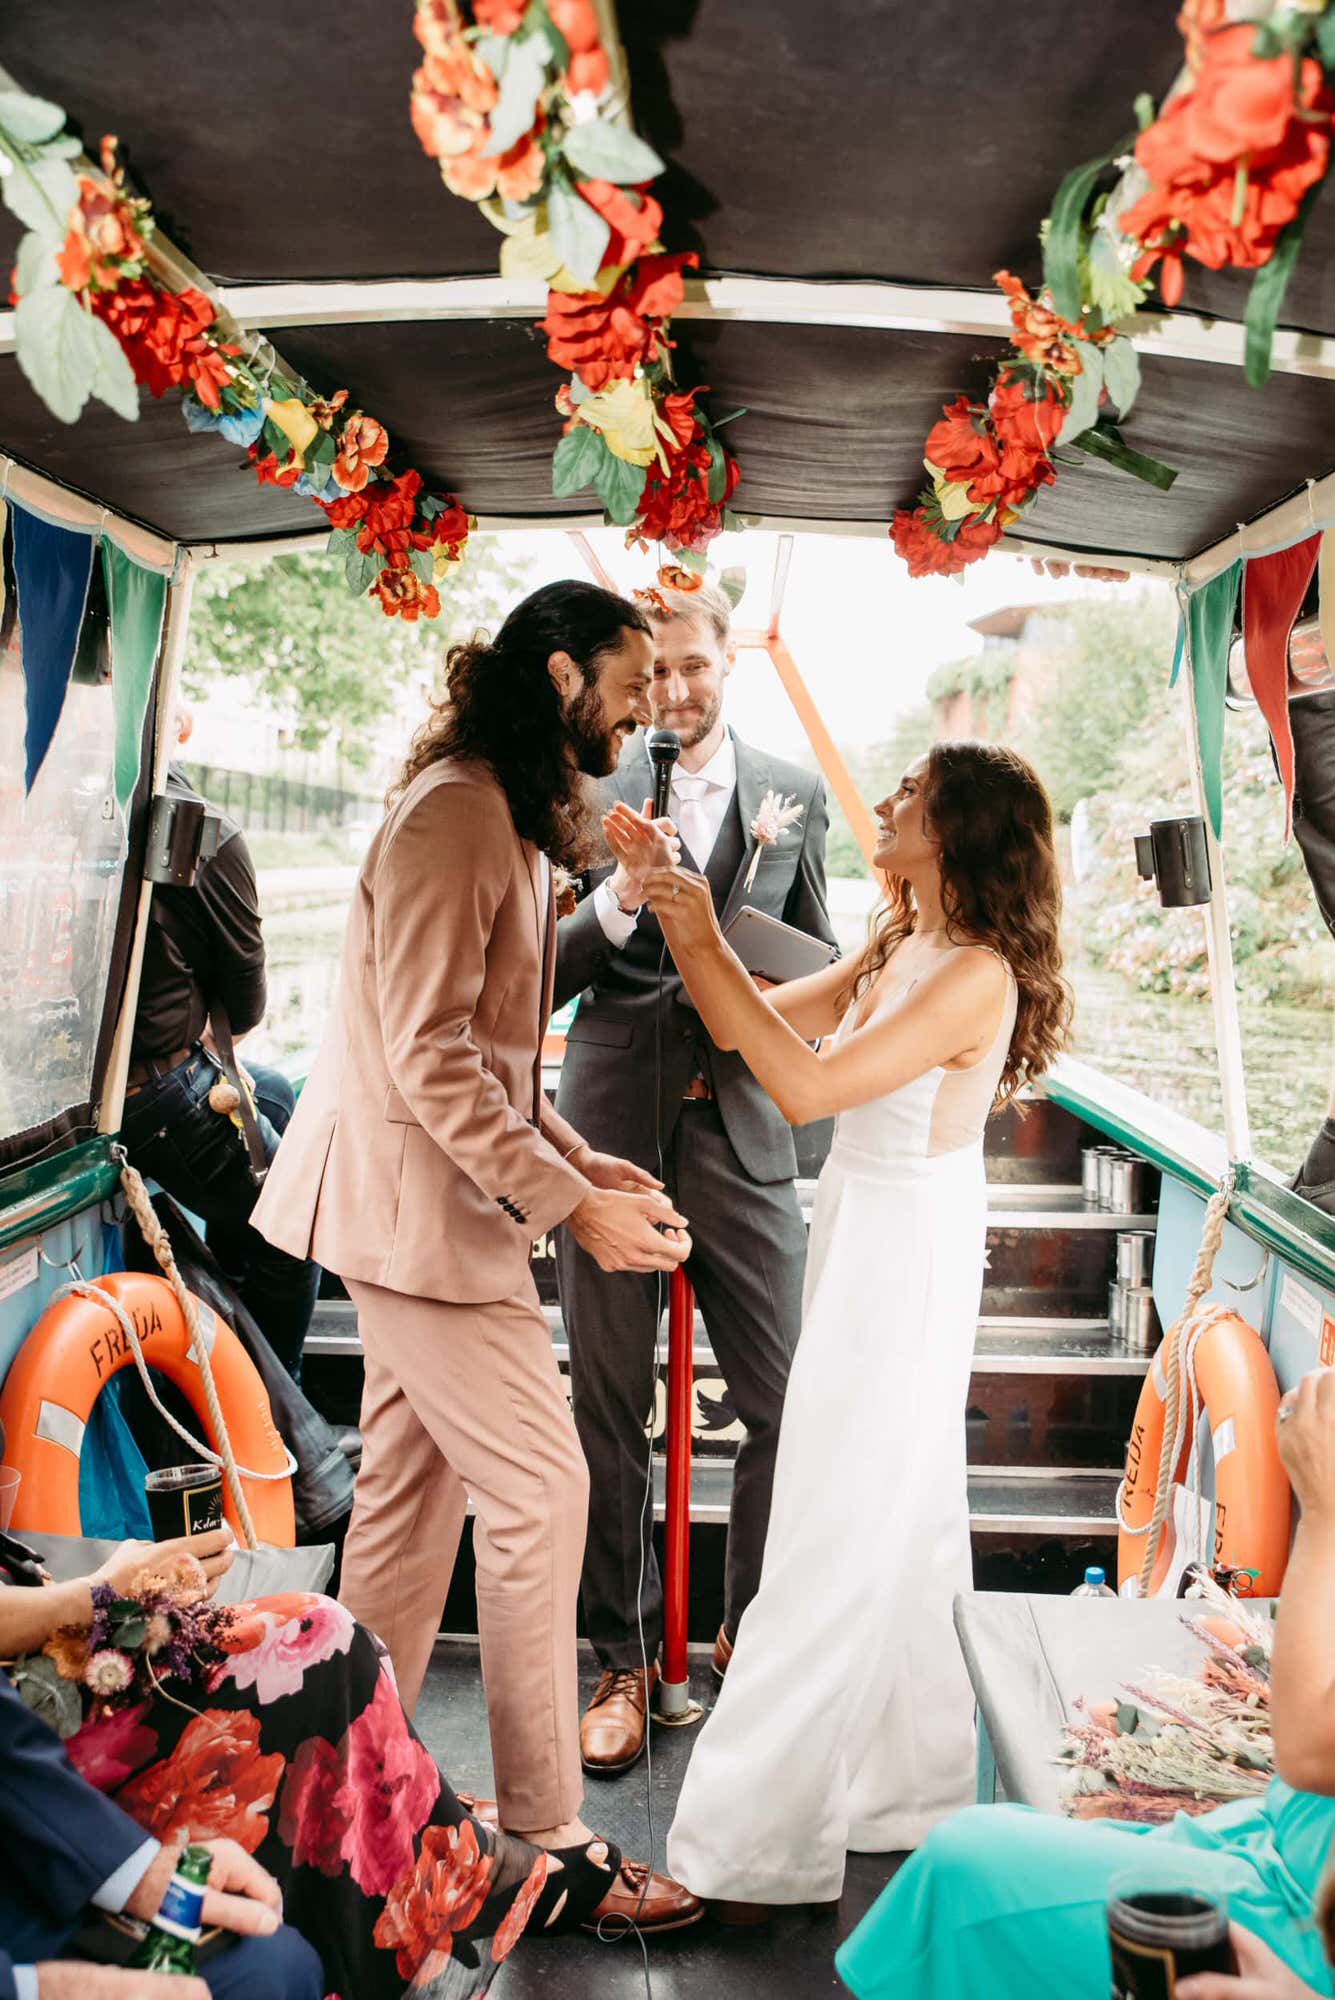 regents-canal-quirky-wedding-roshni-photography-london-wedding-photographer